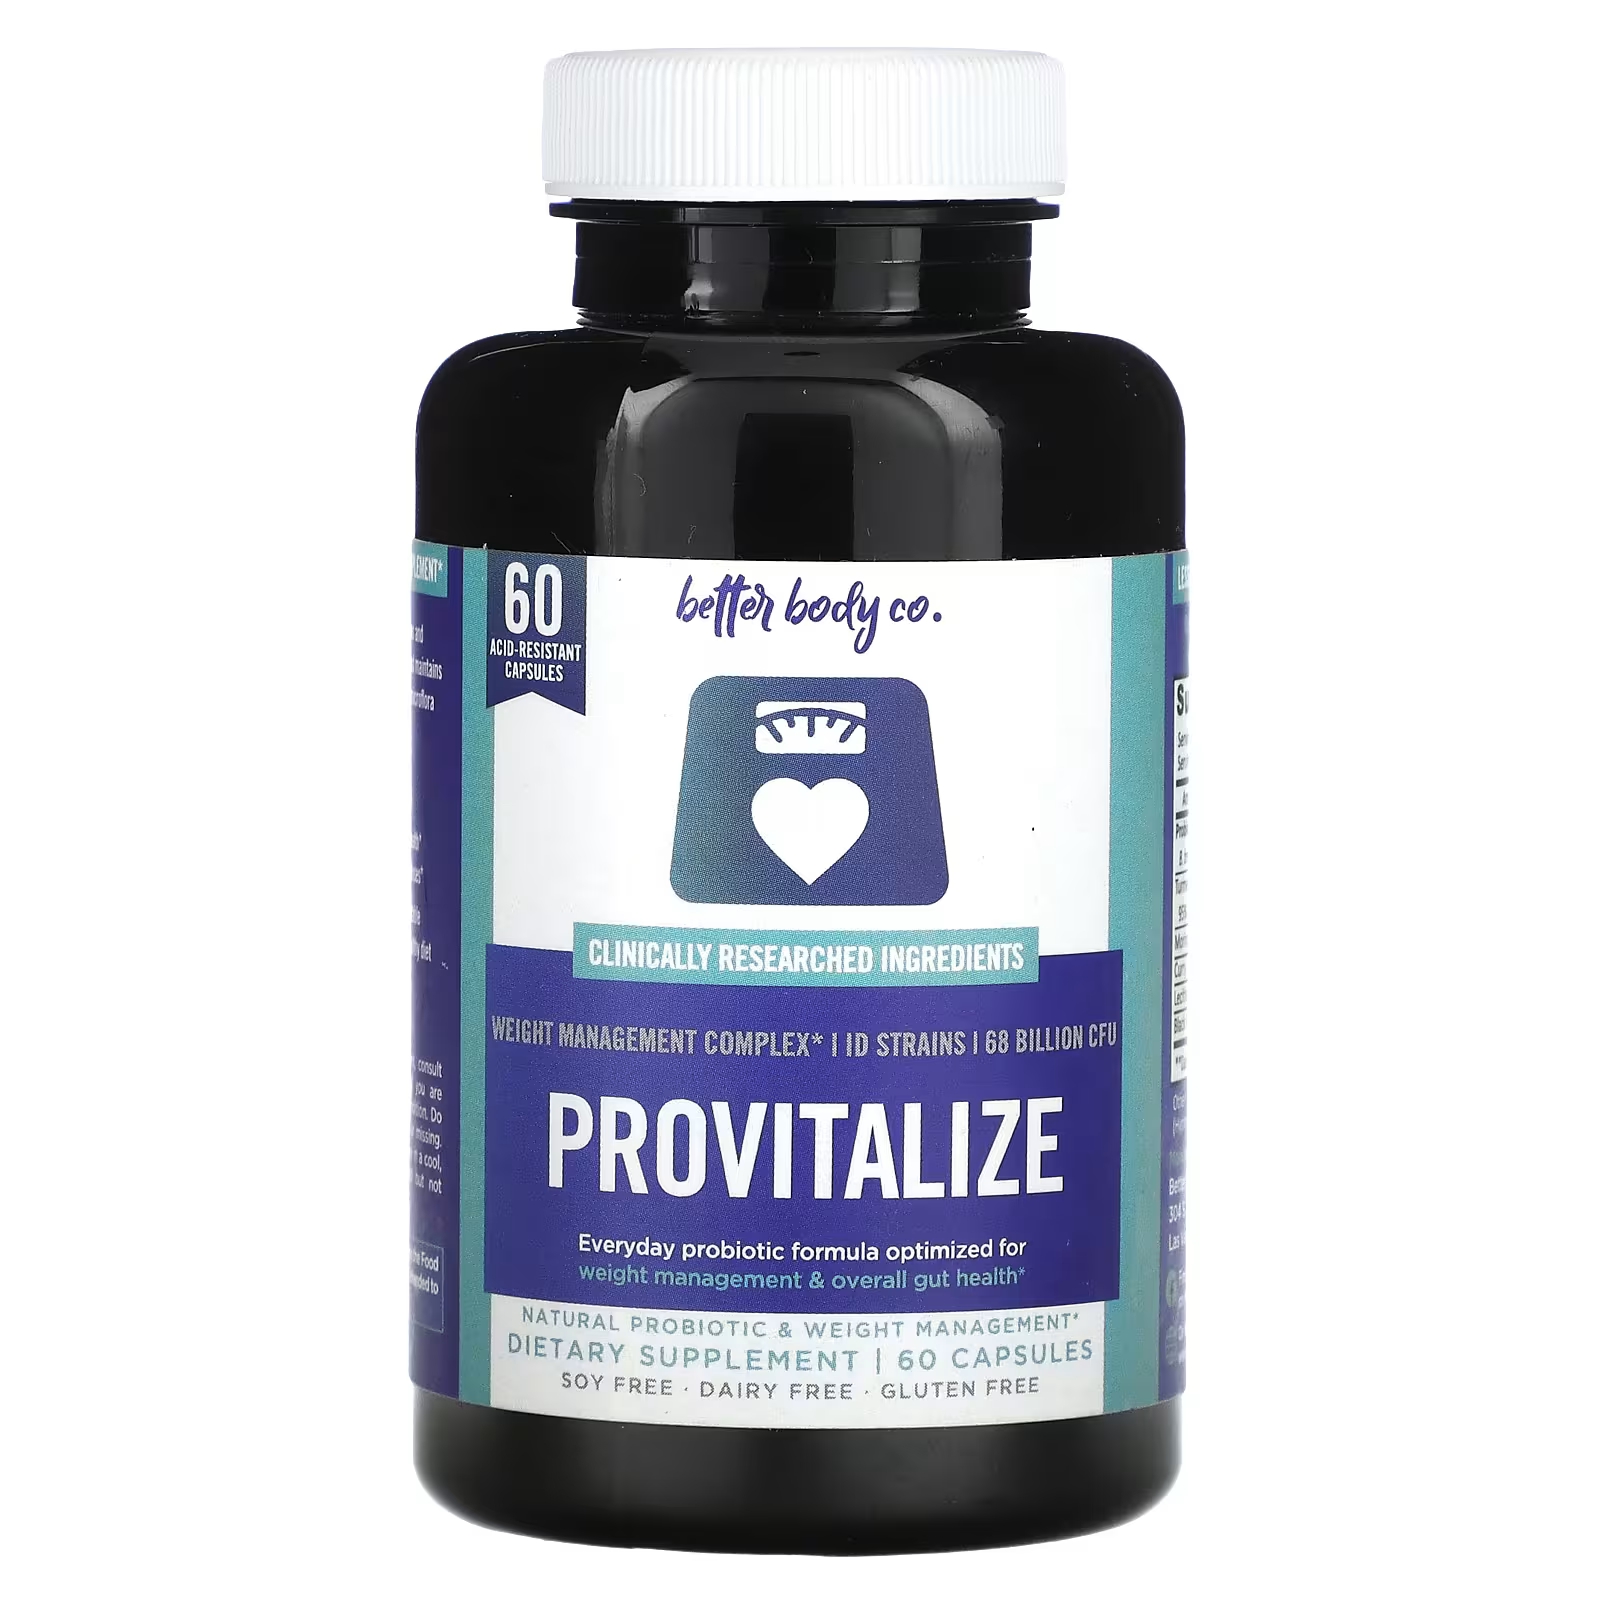 Пищевая добавка Better Body Co. Provitalize, 60 кислотоустойчивых капсул